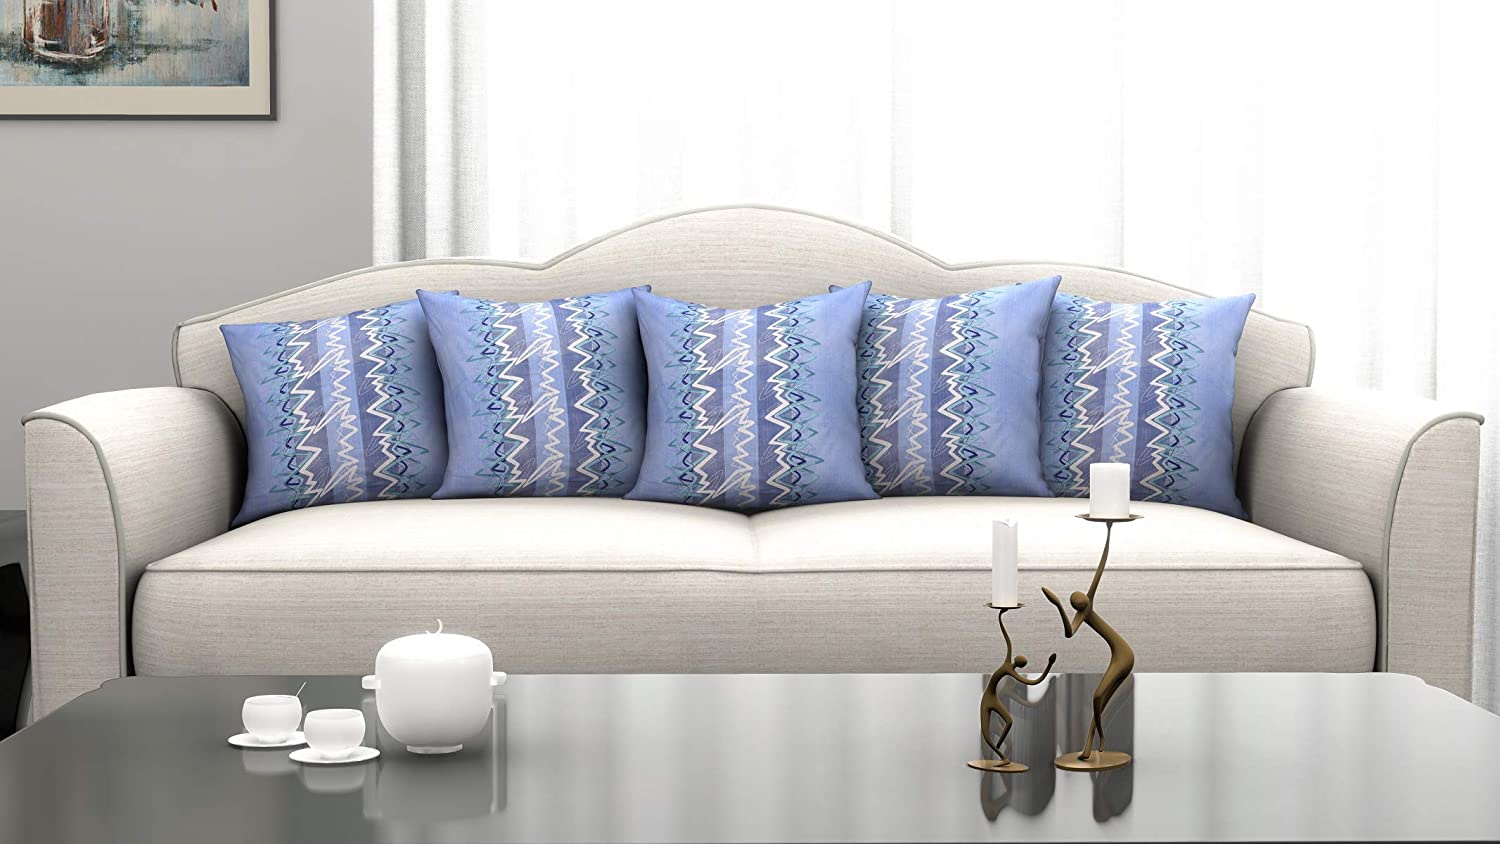 Cushion Cover: Cotton 120 TC Cushion Cover, 16 x 16 Inch, Light Blue, 5 Pieces